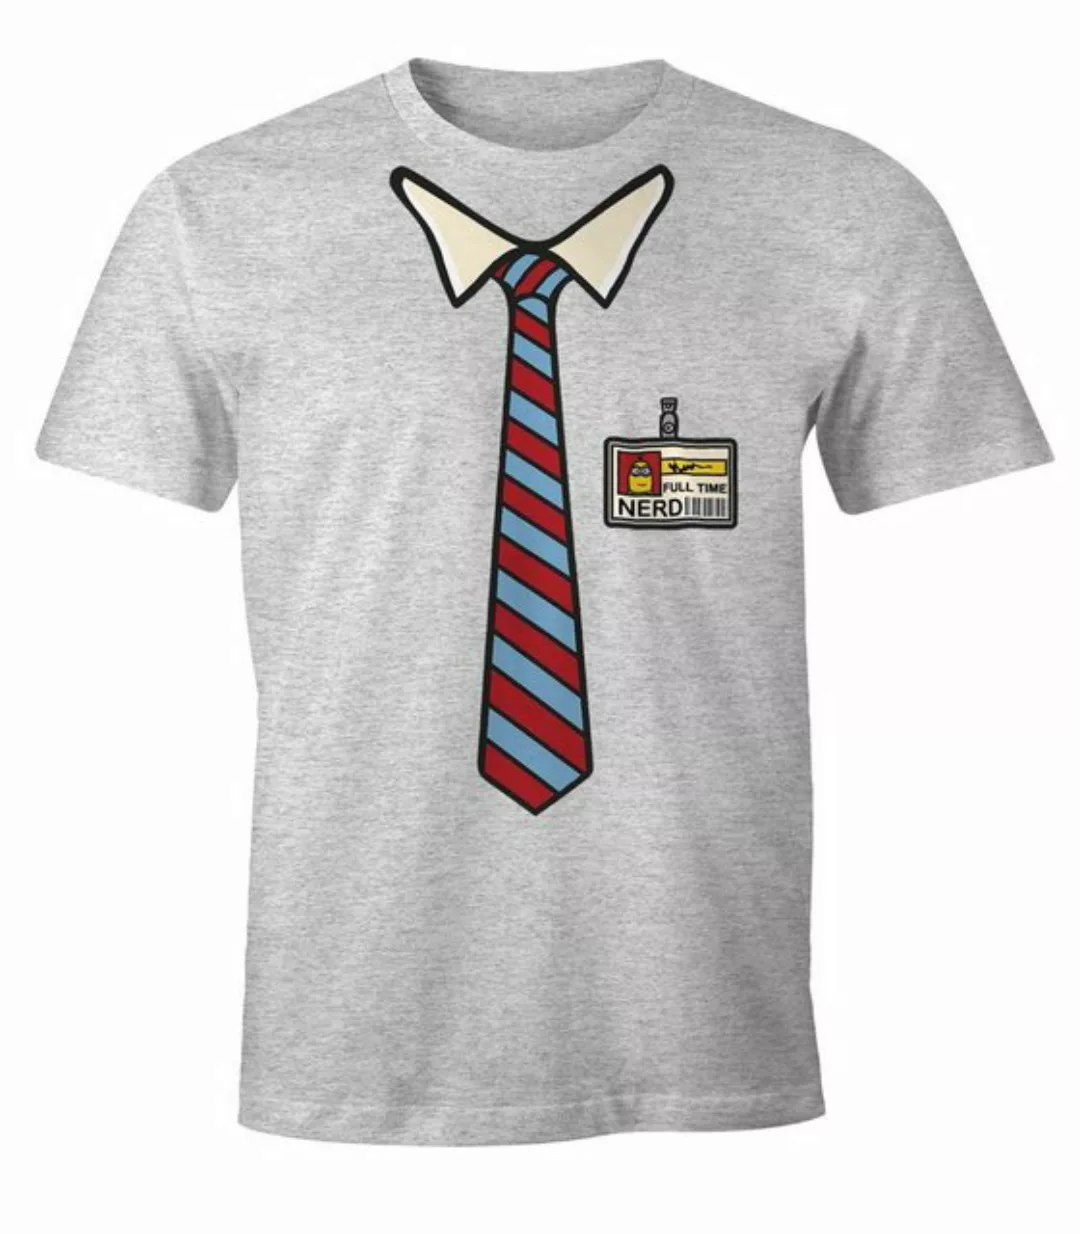 MoonWorks Print-Shirt Herren T-Shirt Full Time Nerd Geek Fun-Shirt Moonwork günstig online kaufen